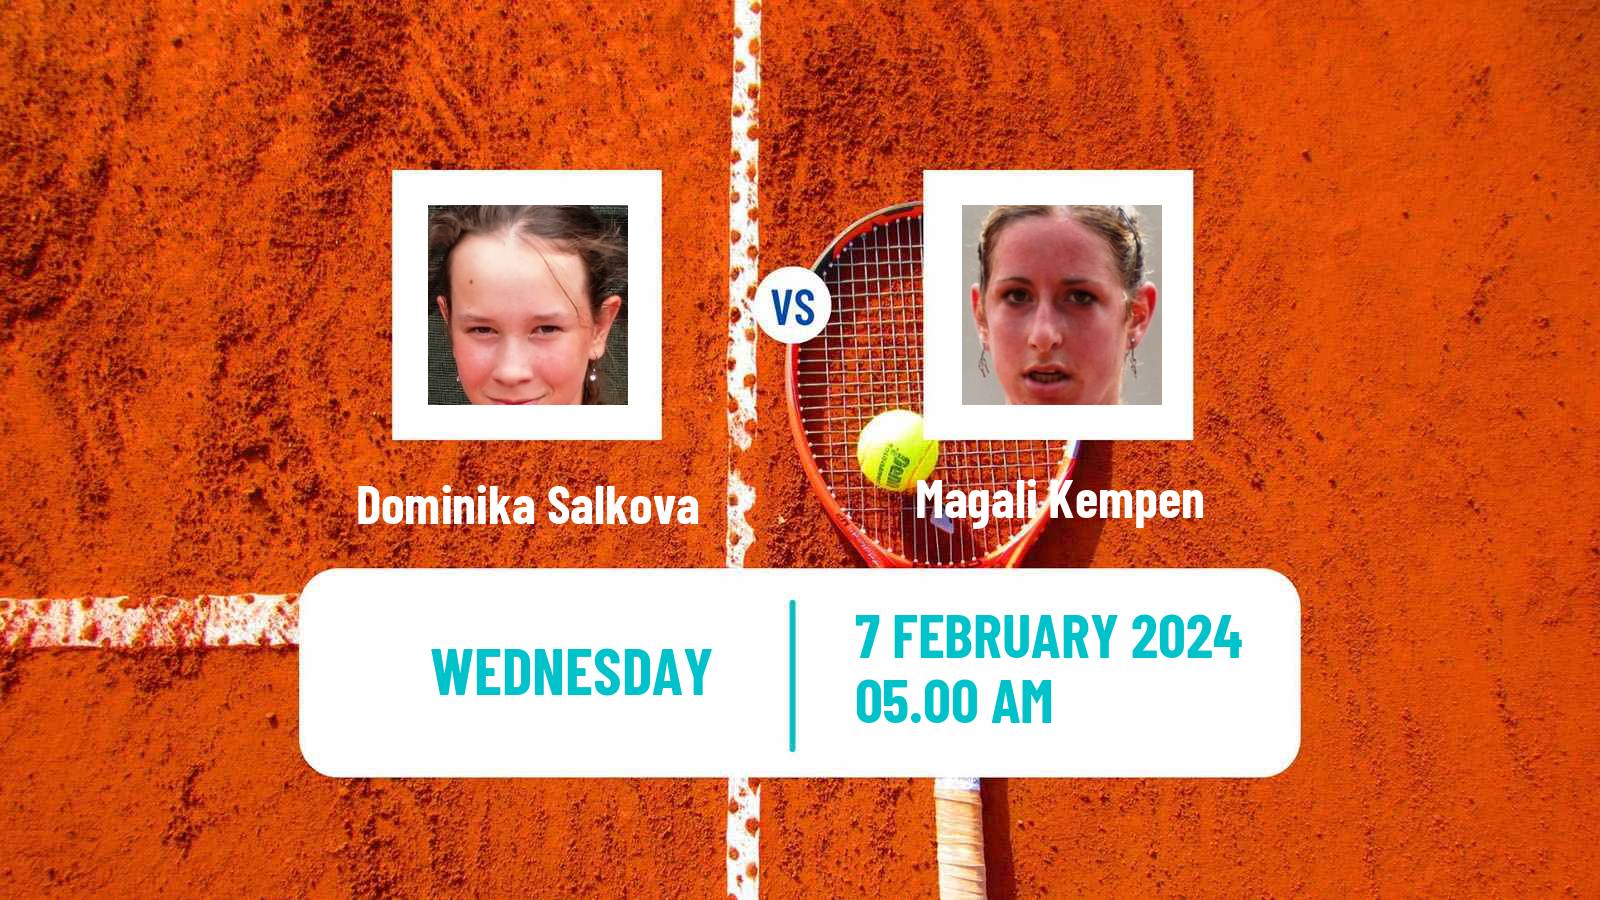 Tennis ITF W50 Edgbaston Women Dominika Salkova - Magali Kempen